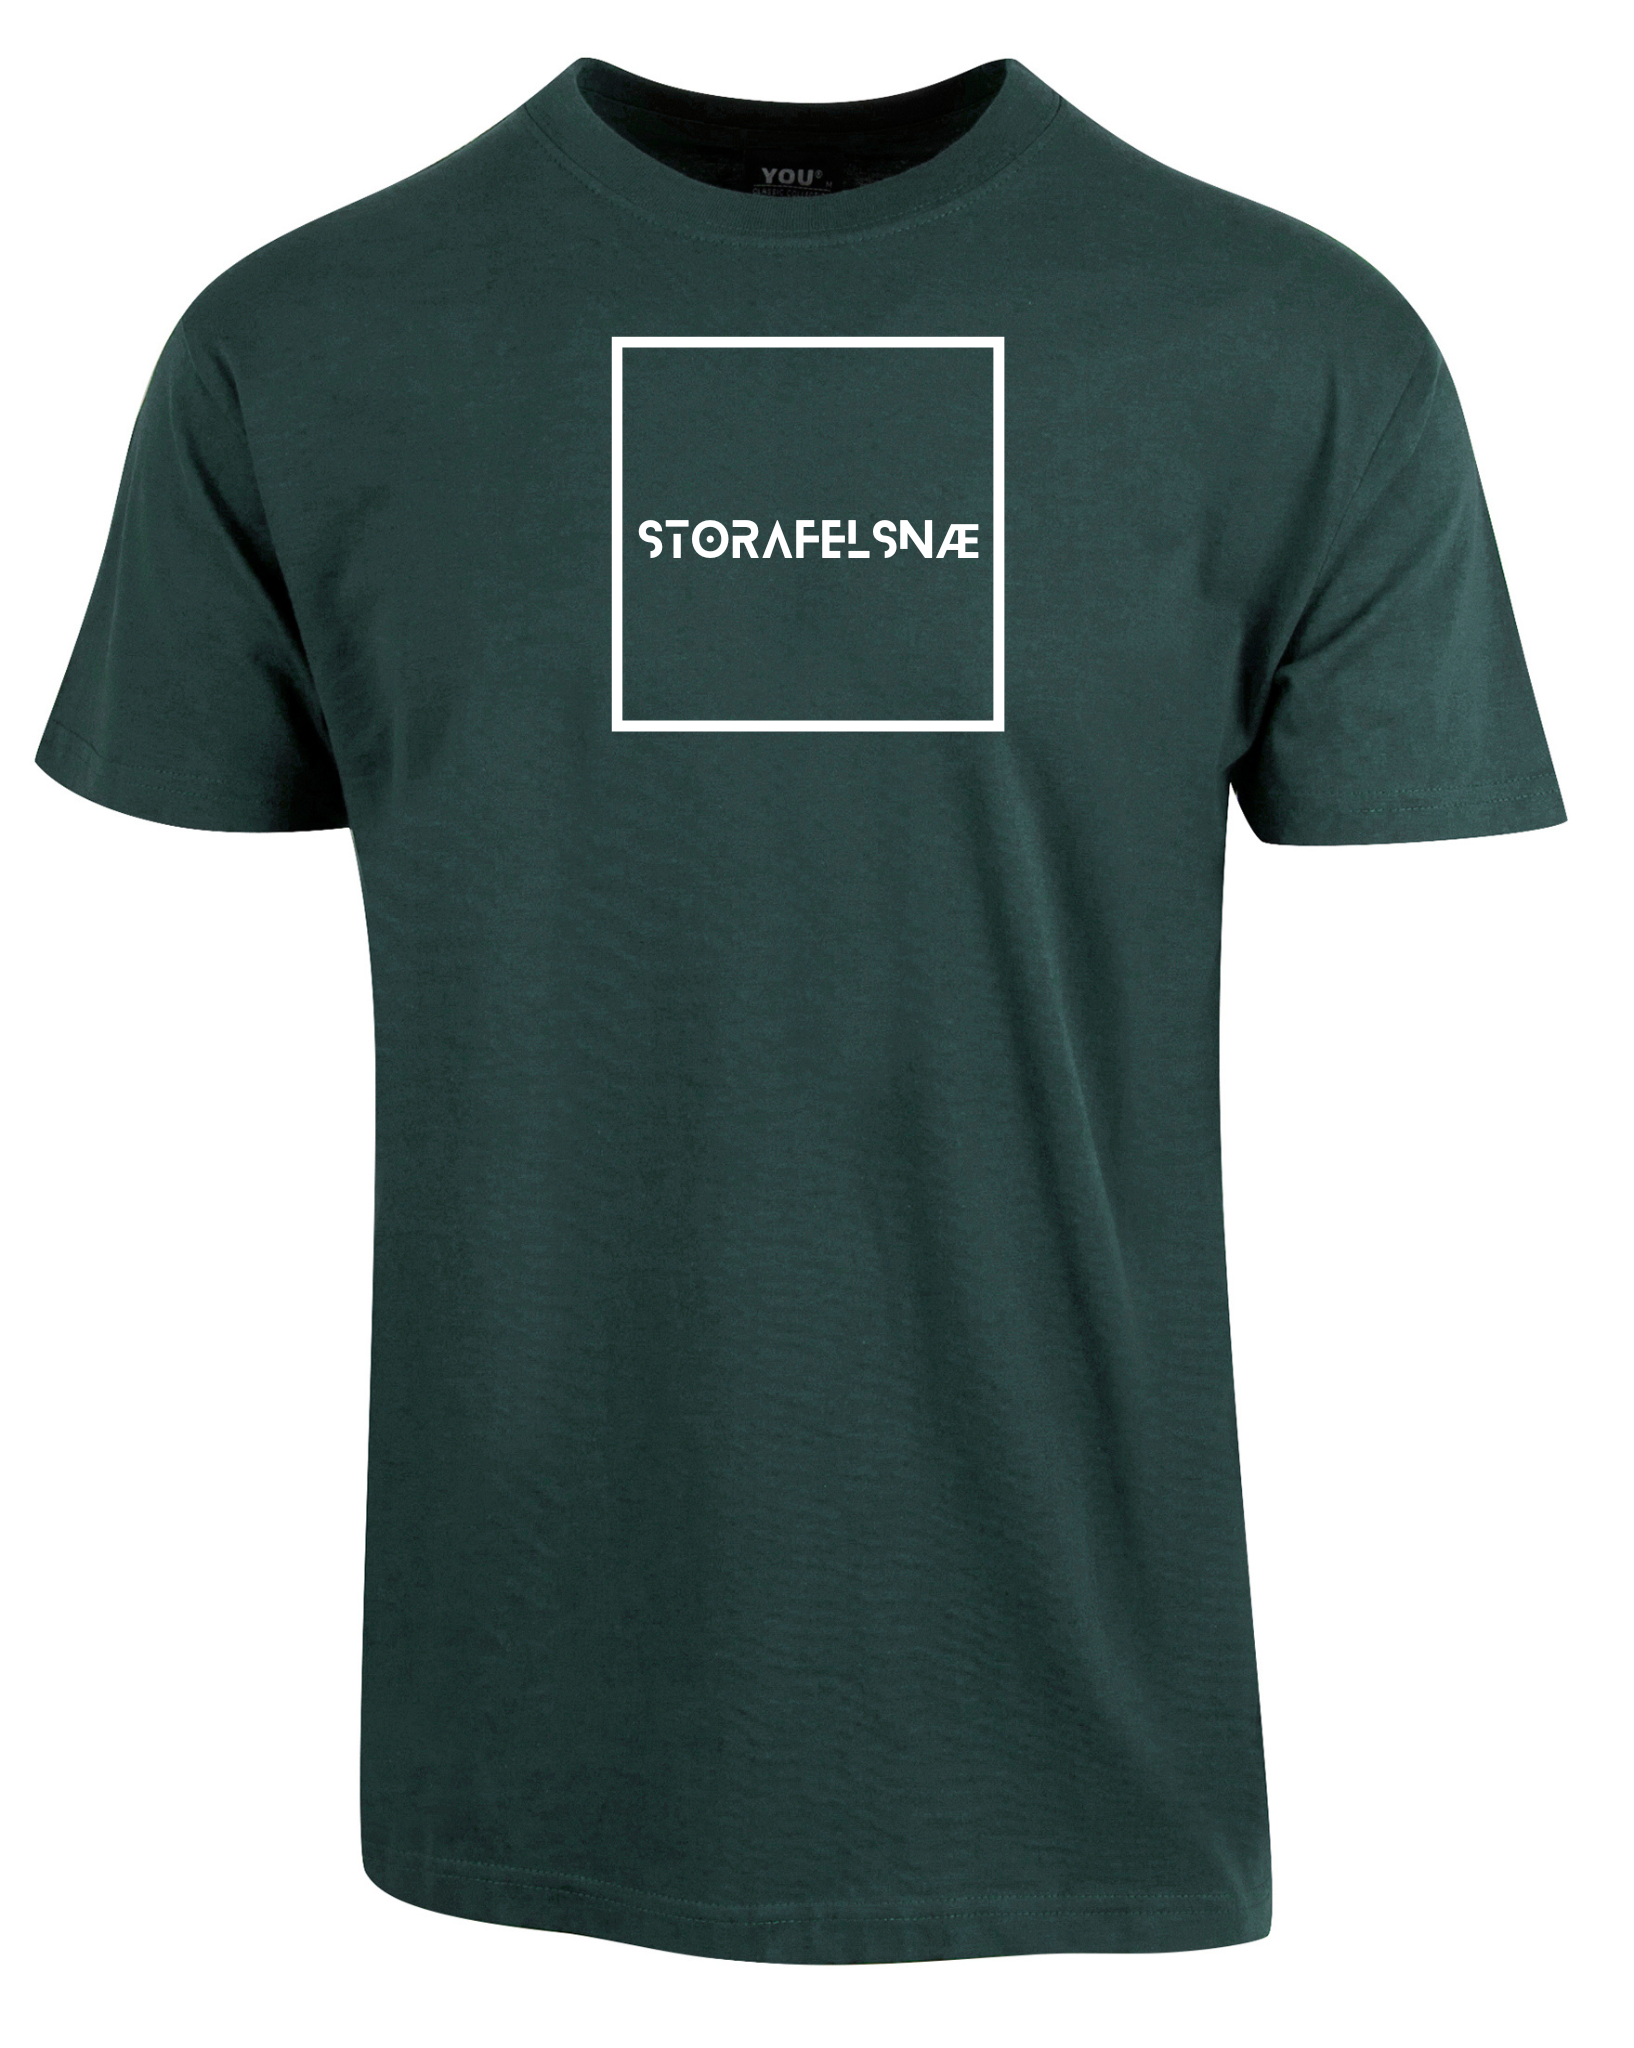 T-skjorte med teksten "Storafelsnæ"